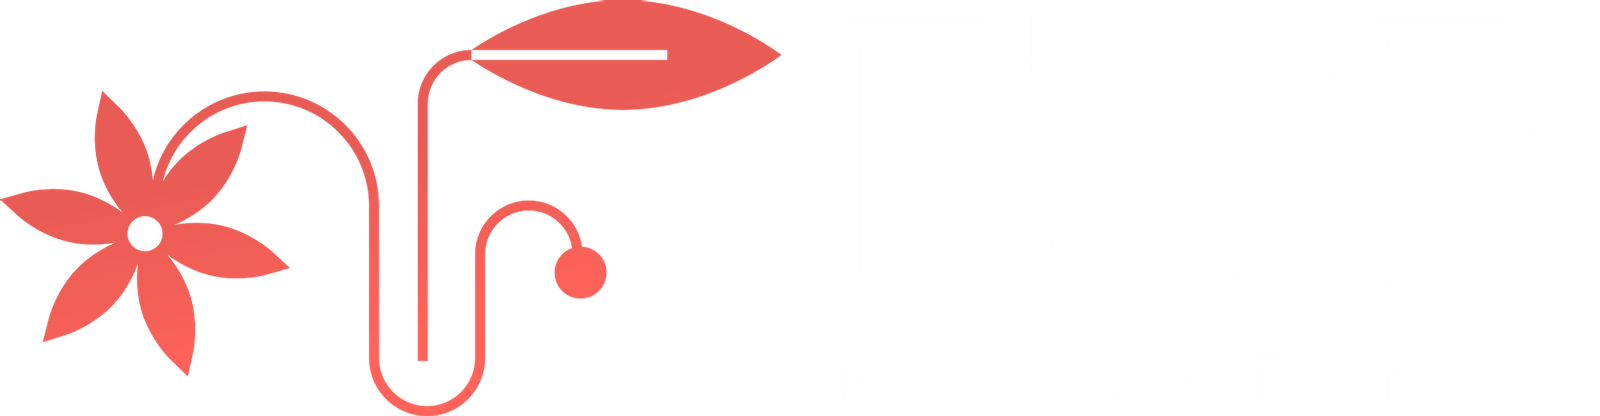 Energy and Telecom Engineers